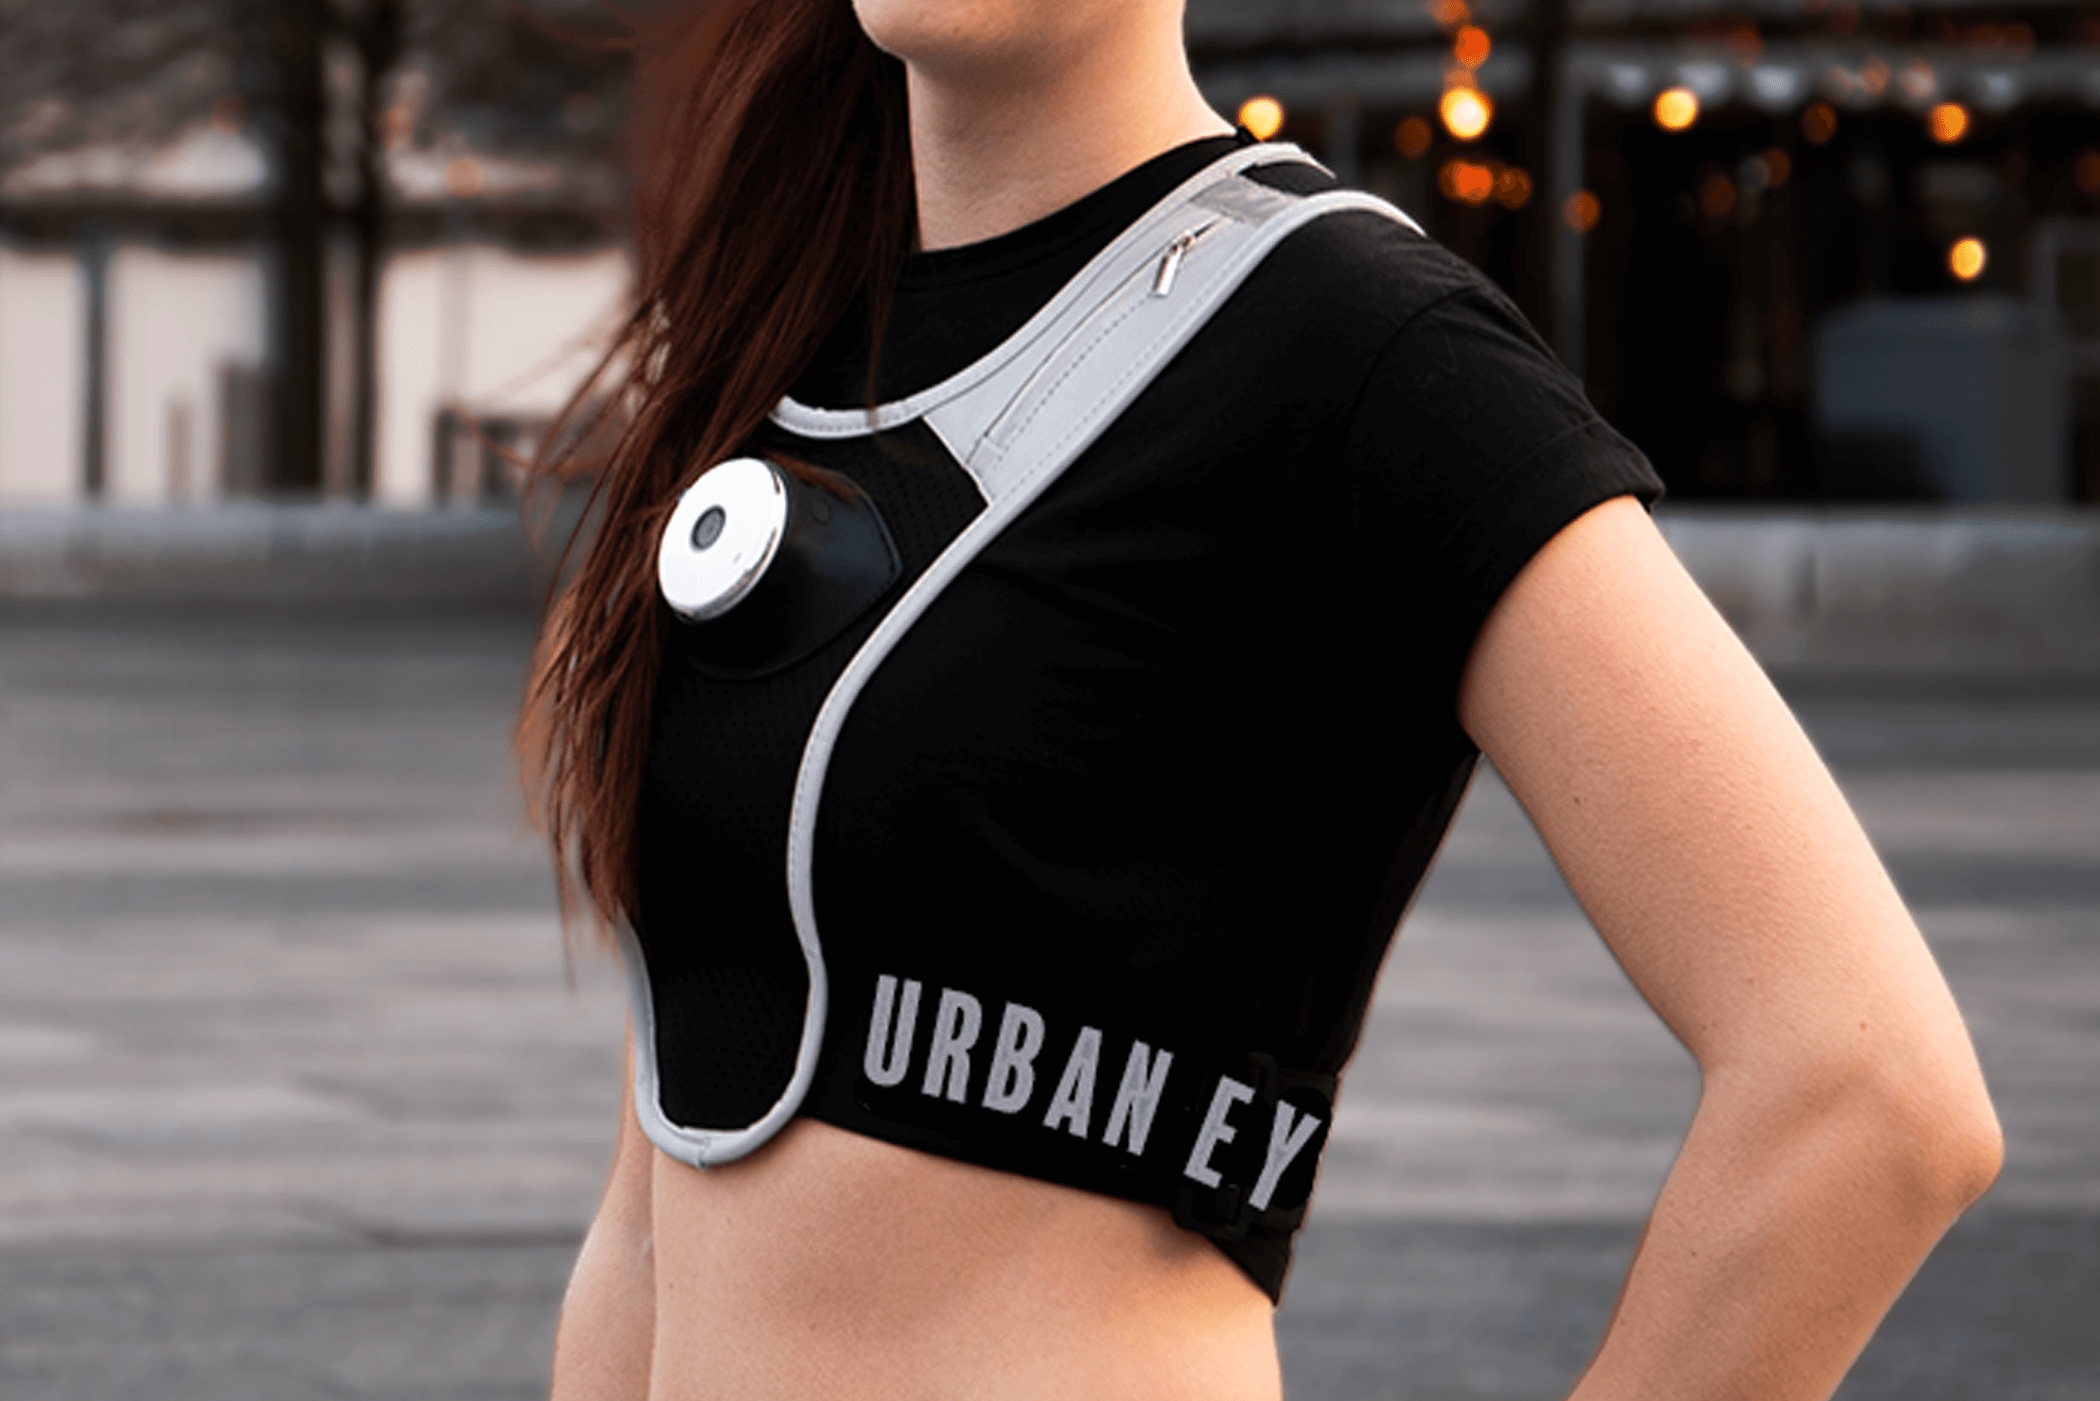 Urban Eyes personal security vest design